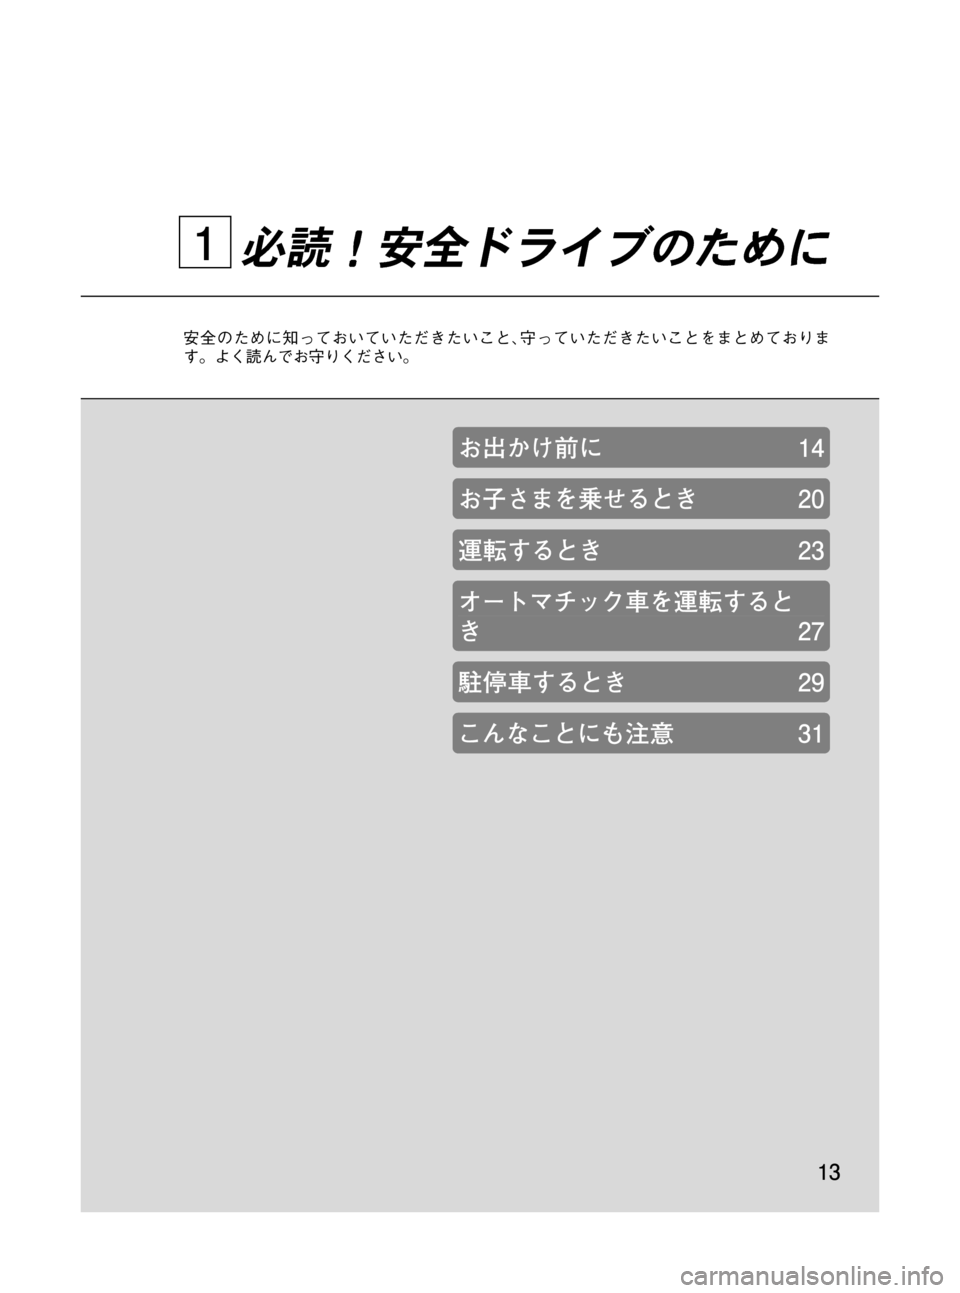 MAZDA MODEL RX 8 2008  取扱説明書 (in Japanese) Black plate (13,1)
必読！安全ドライブのために
安全のために知っておいていただきたいこと､守っていただきたいことをまとめておりま
す。よく読ん�